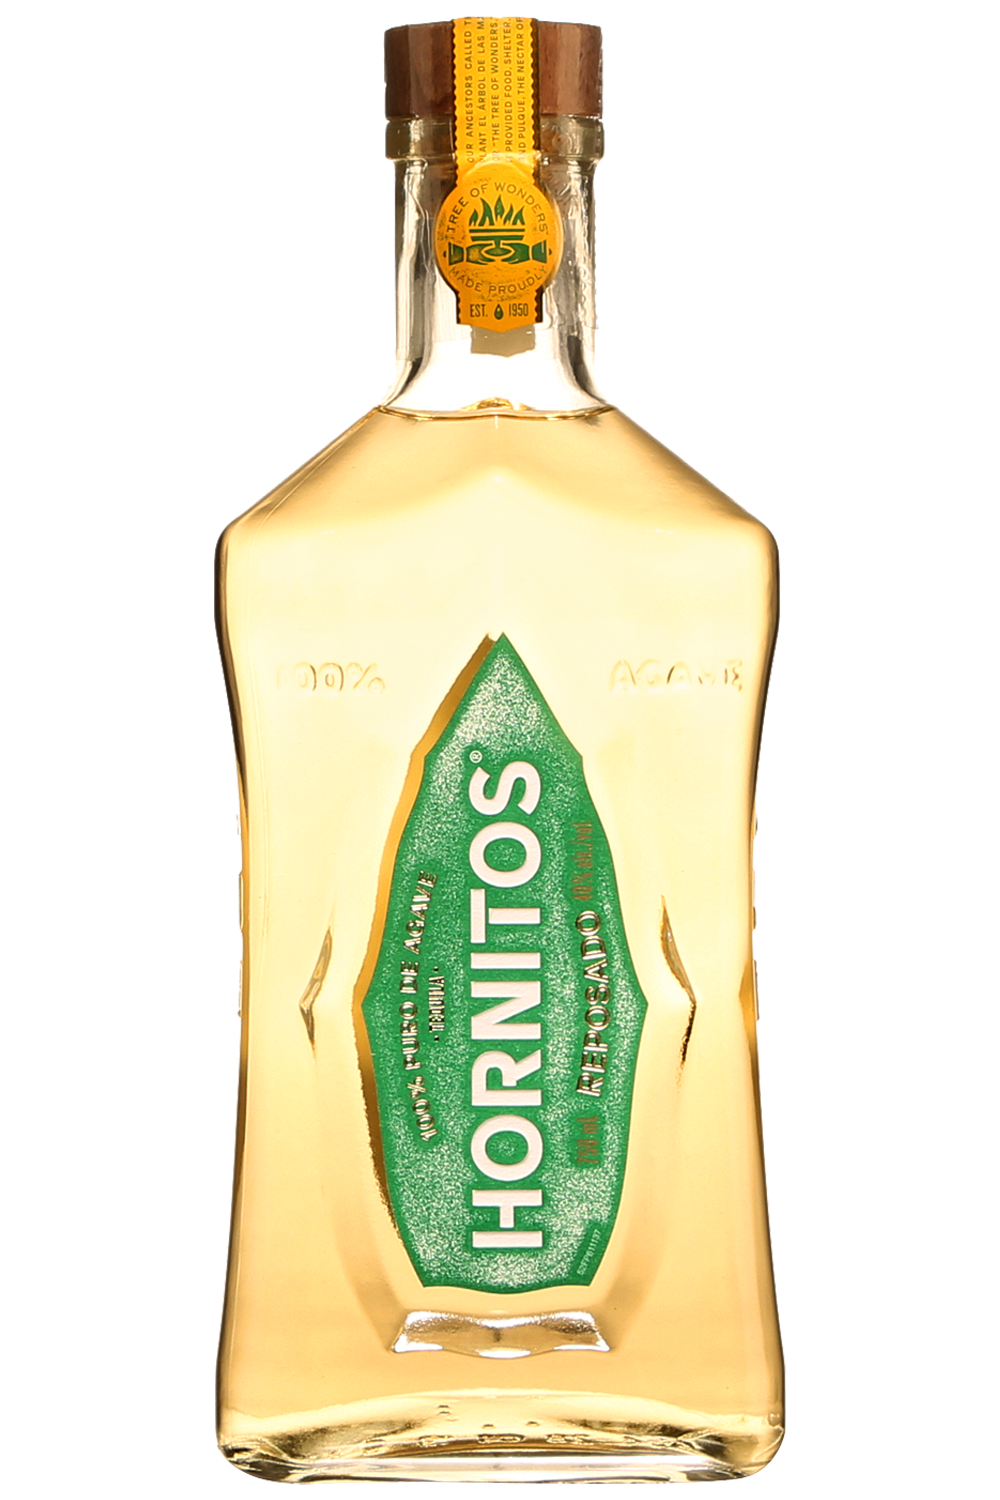 hornitos margarita bottle